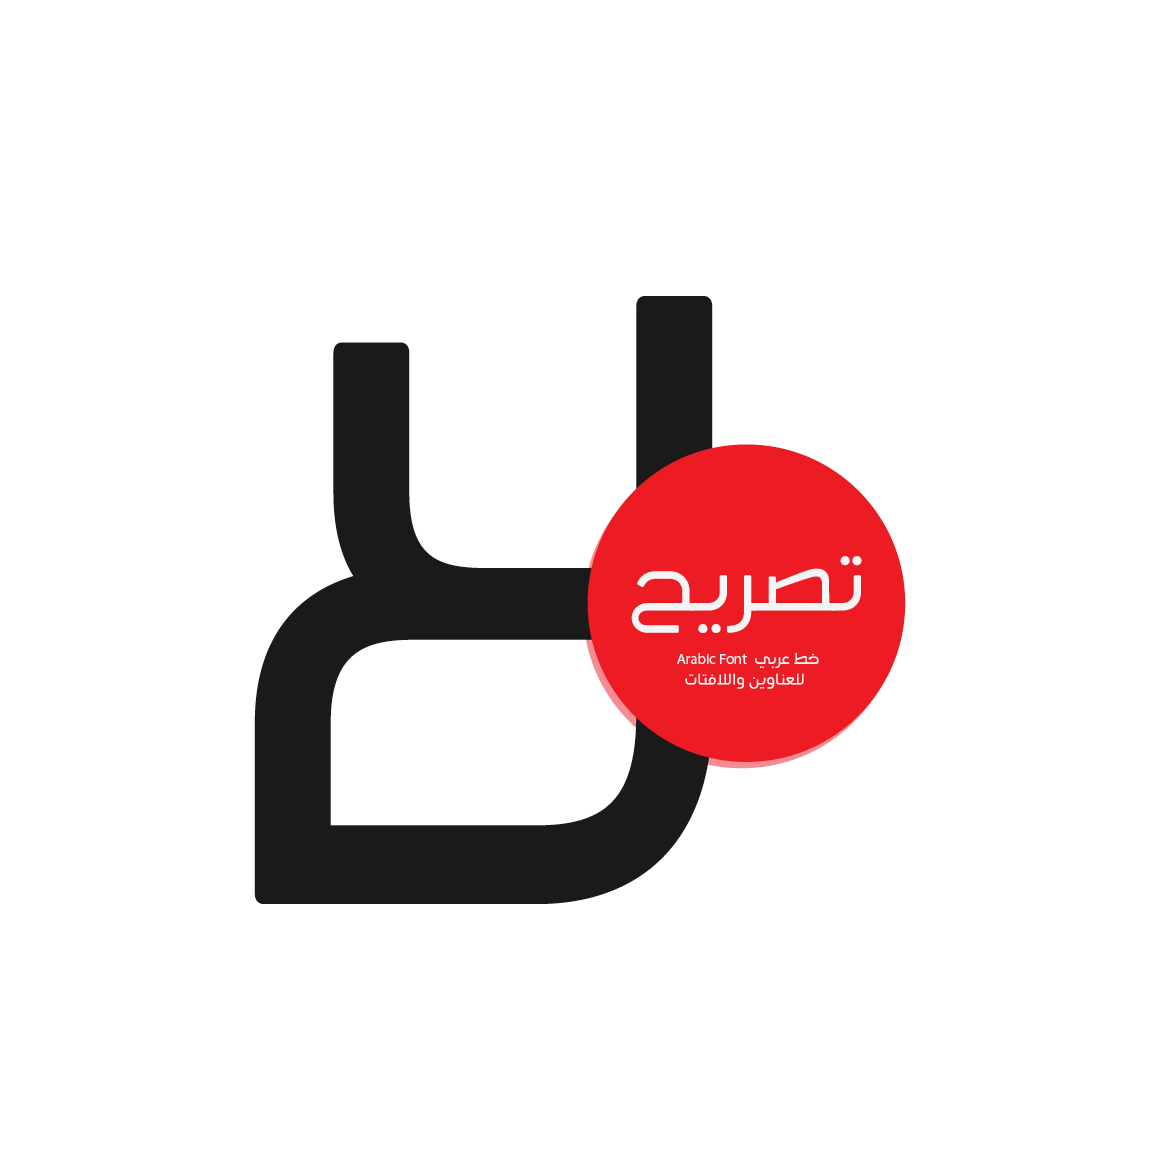 Tasreeh - Arabic Font cover image.